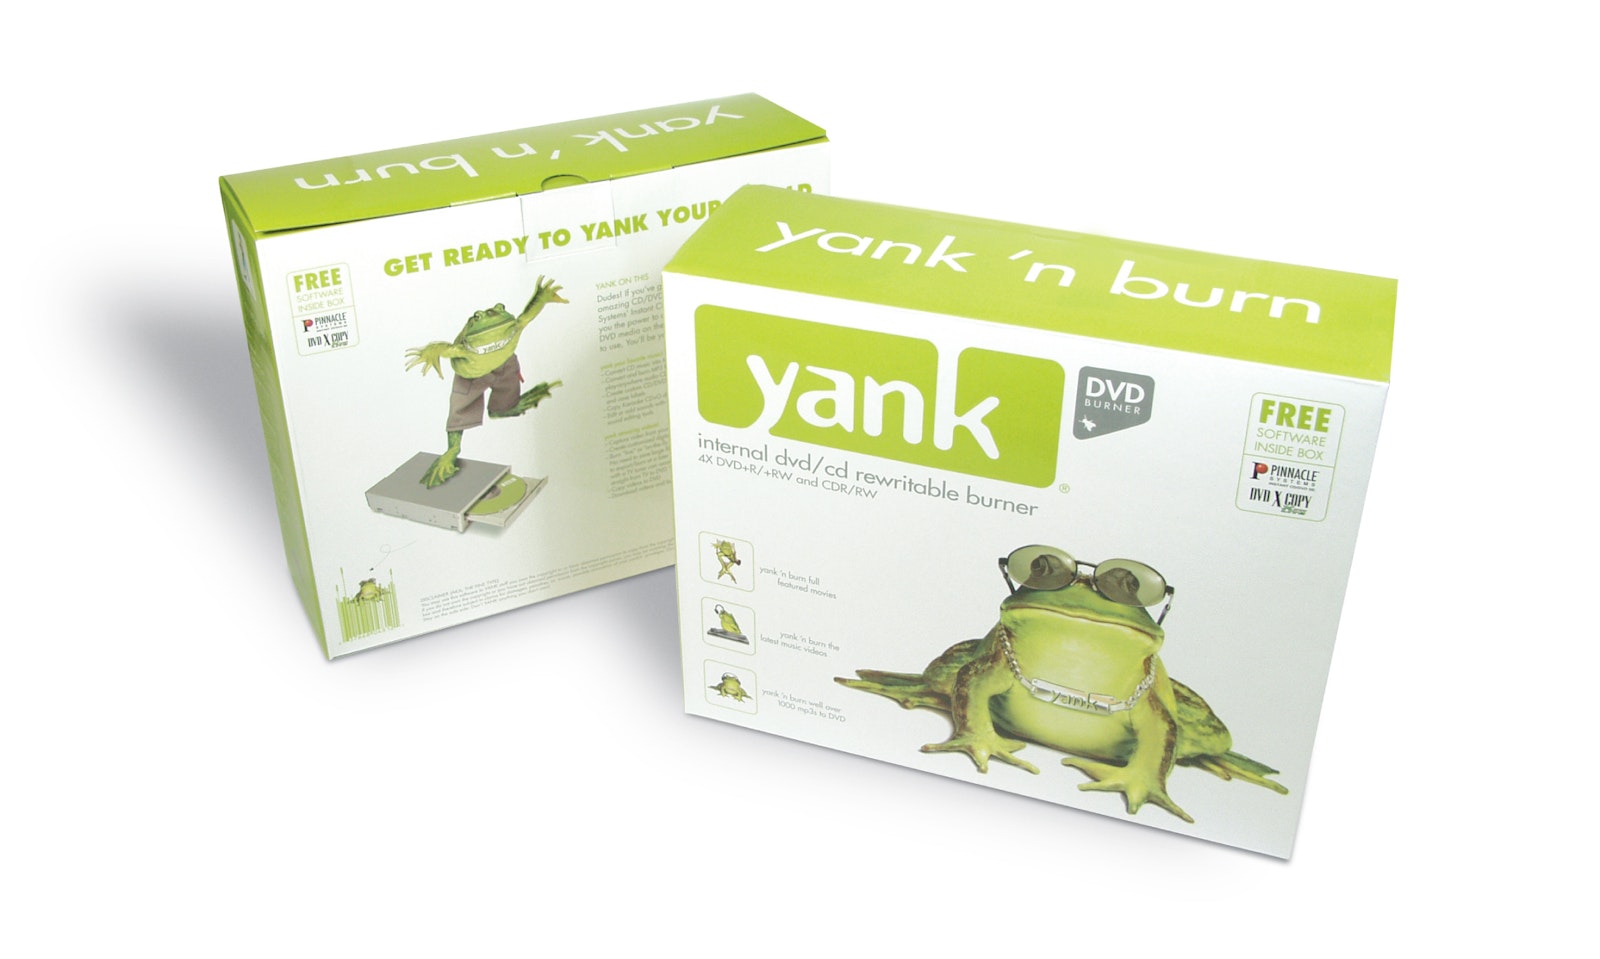 Yank packaging box design for dvd and cd burner.